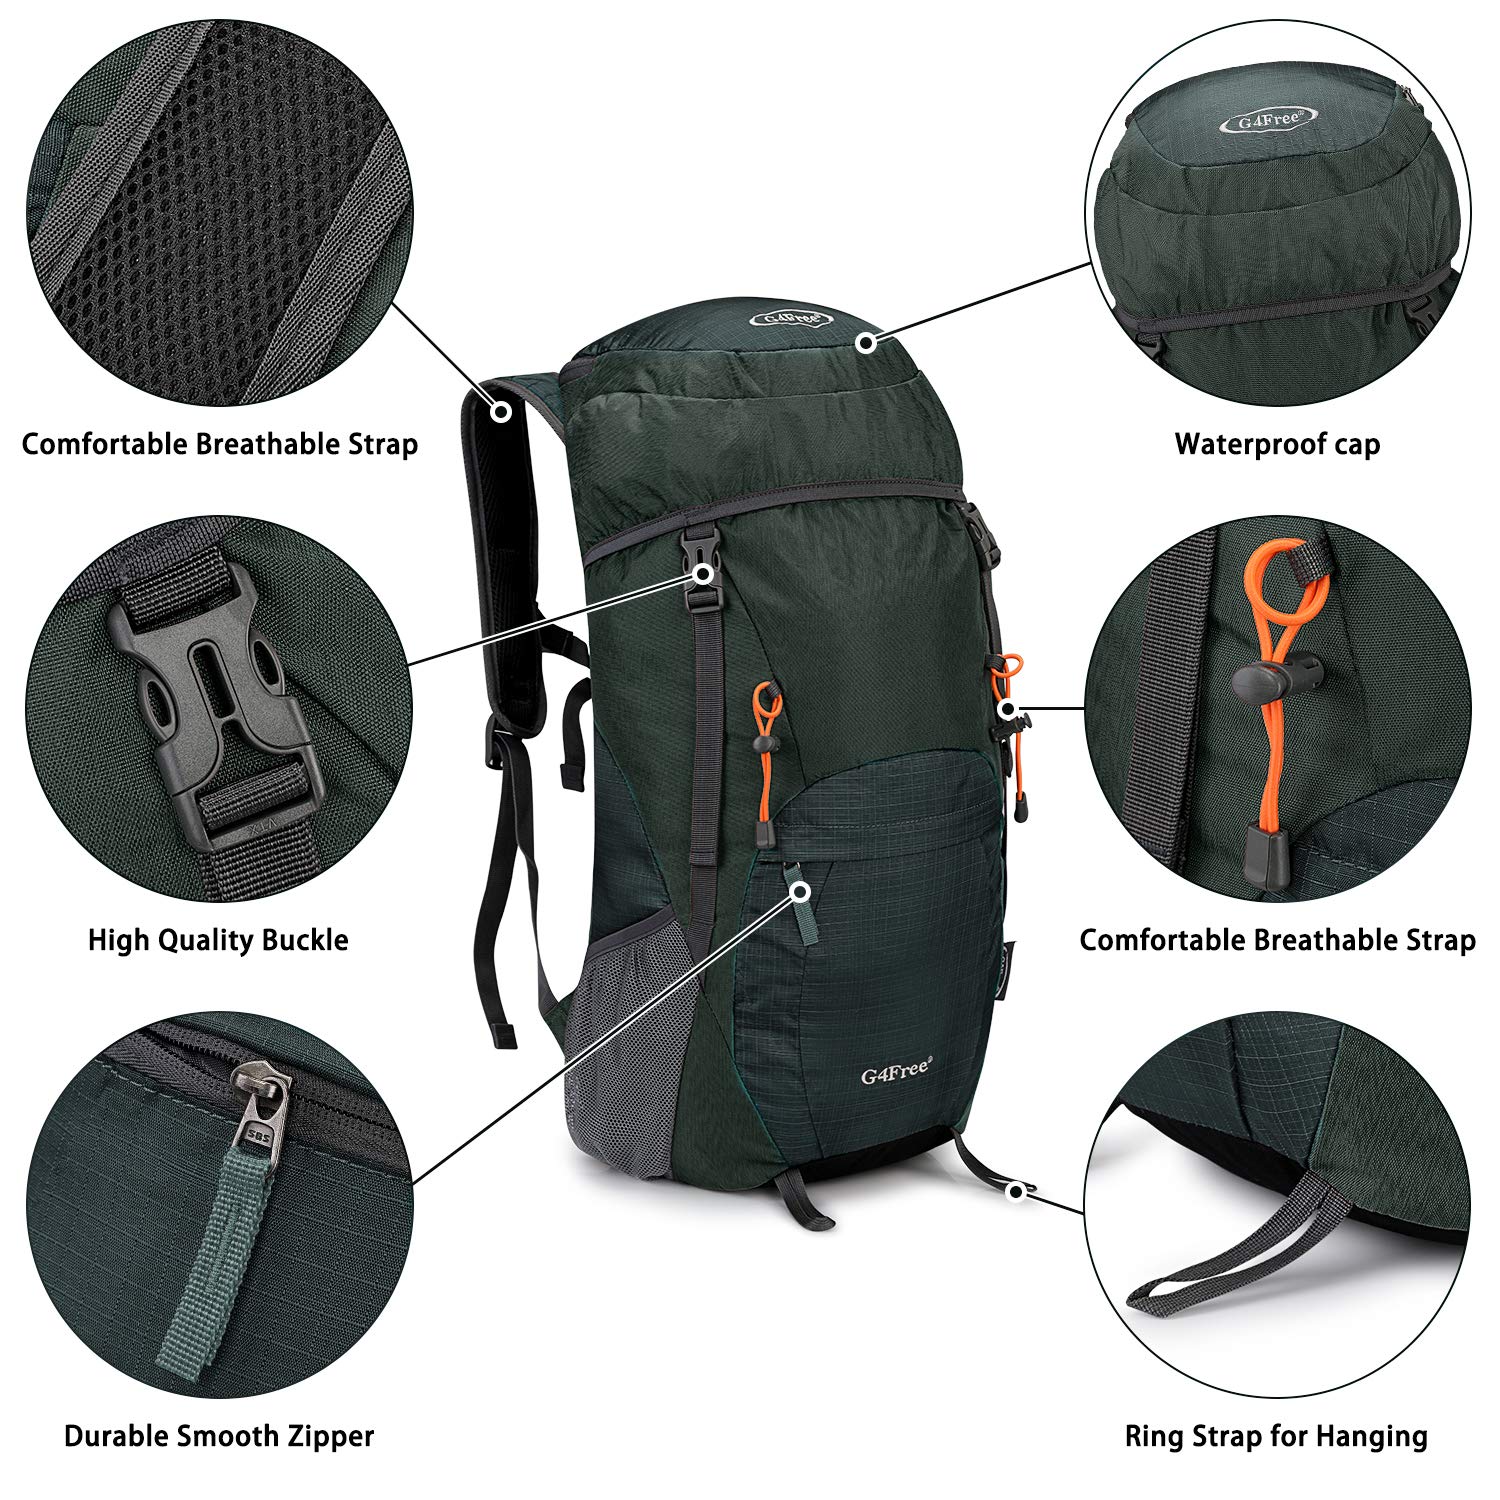 [G4Free] 超軽量 折畳みバッグ 登山リュック 40l/45l 大容量 防水 ハイキング バックパック 旅行バッグ 軽量 通気 便利グッズ 多機能 男女兼用 アウトドア